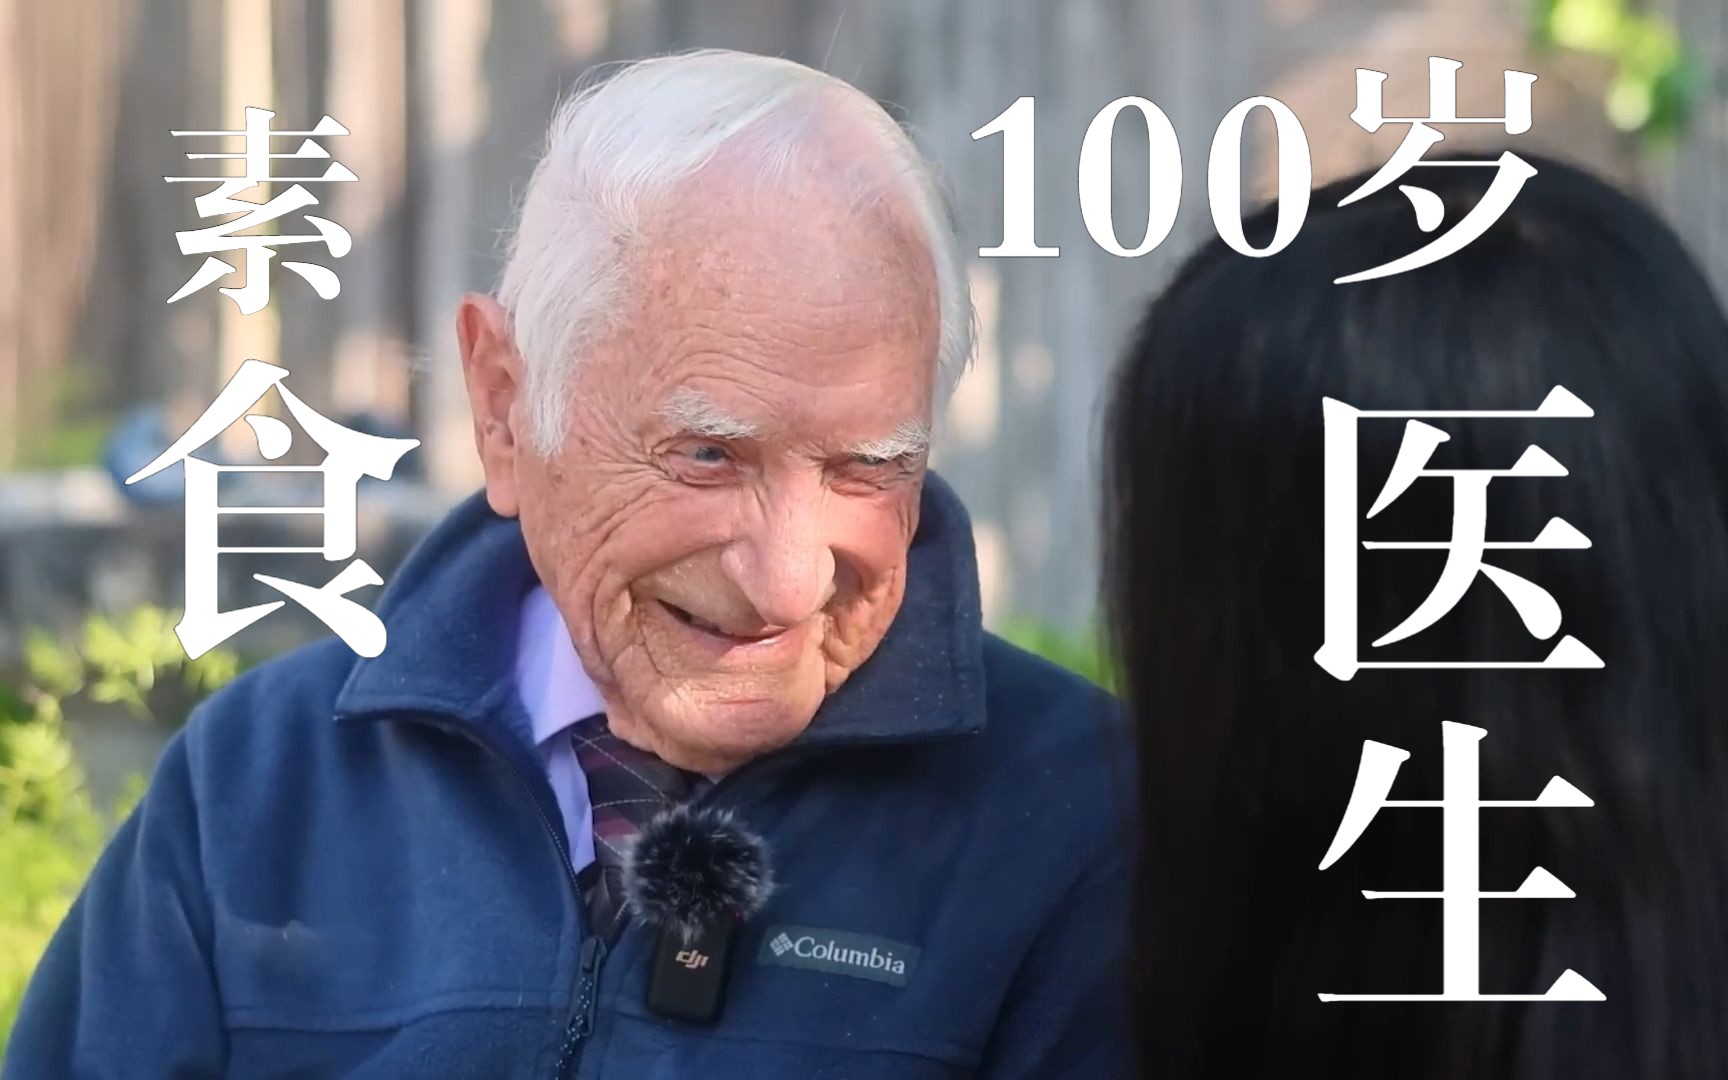 【长命百岁的秘密】采访100岁素食医生[100 Year-Old Nutrition Professor Dr. John Scharffenberg]